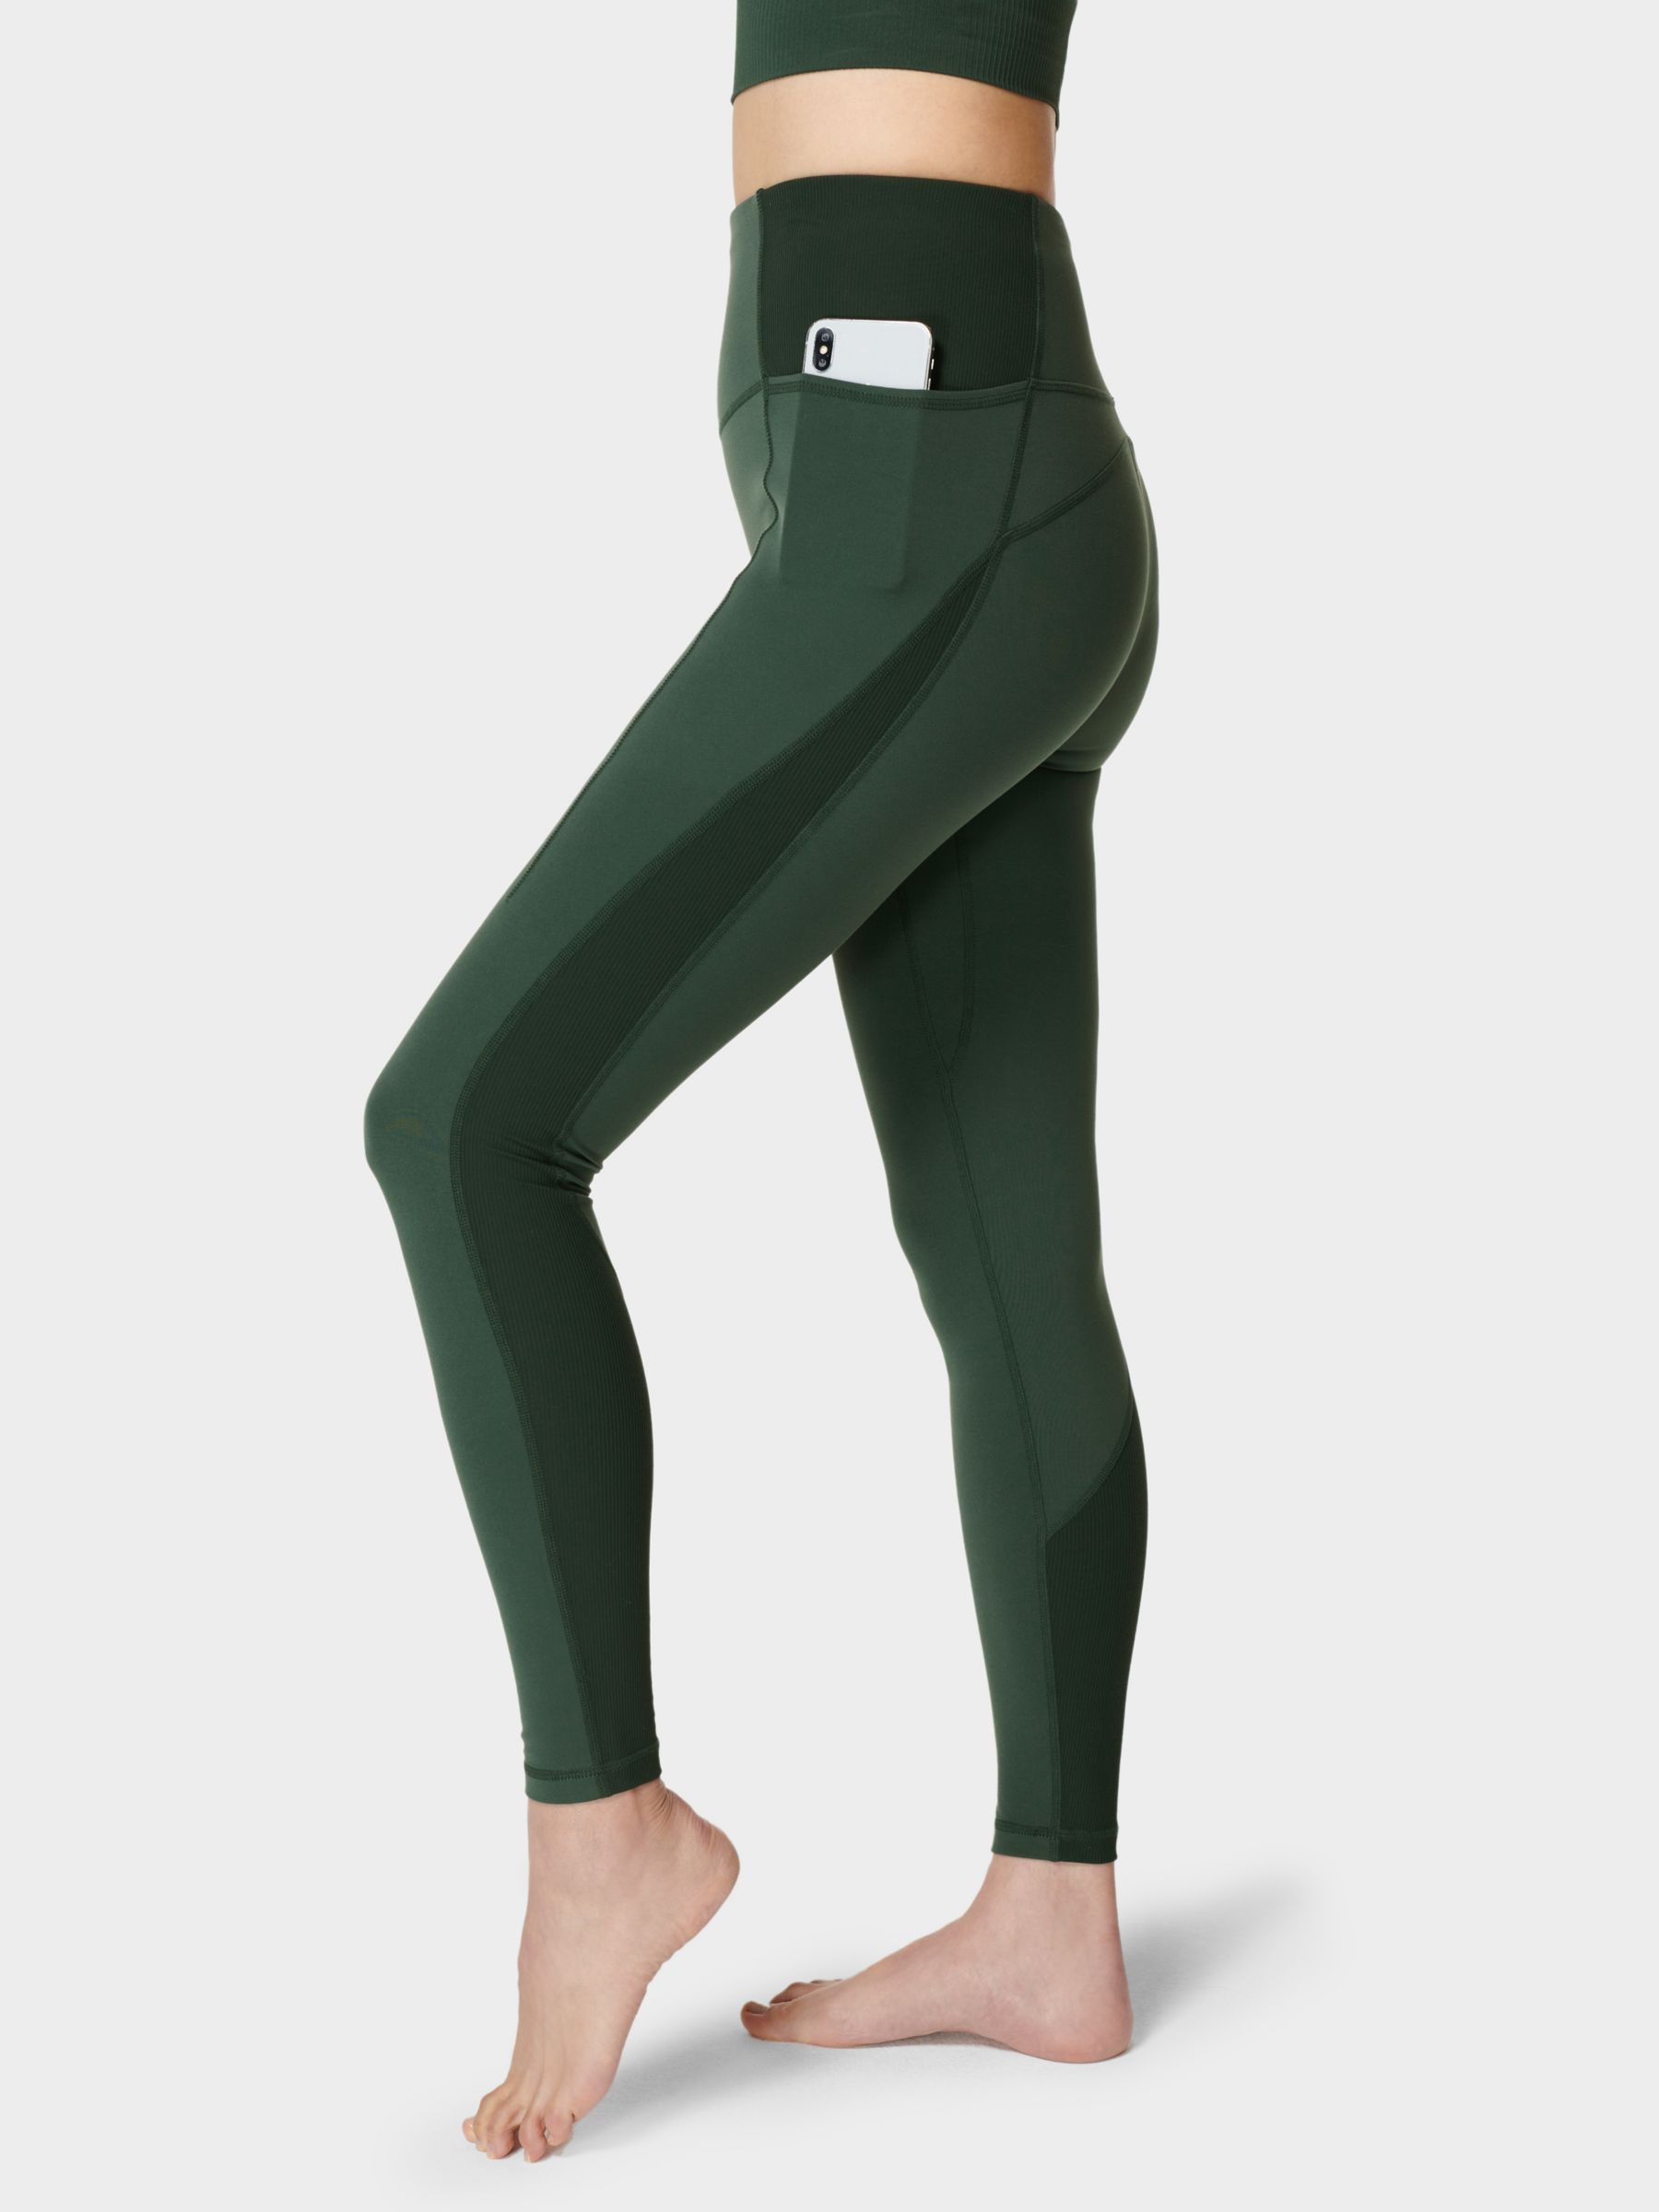 Adidas Maternity Trousers Leggings Yoga Baby Gymnastics Olive Green